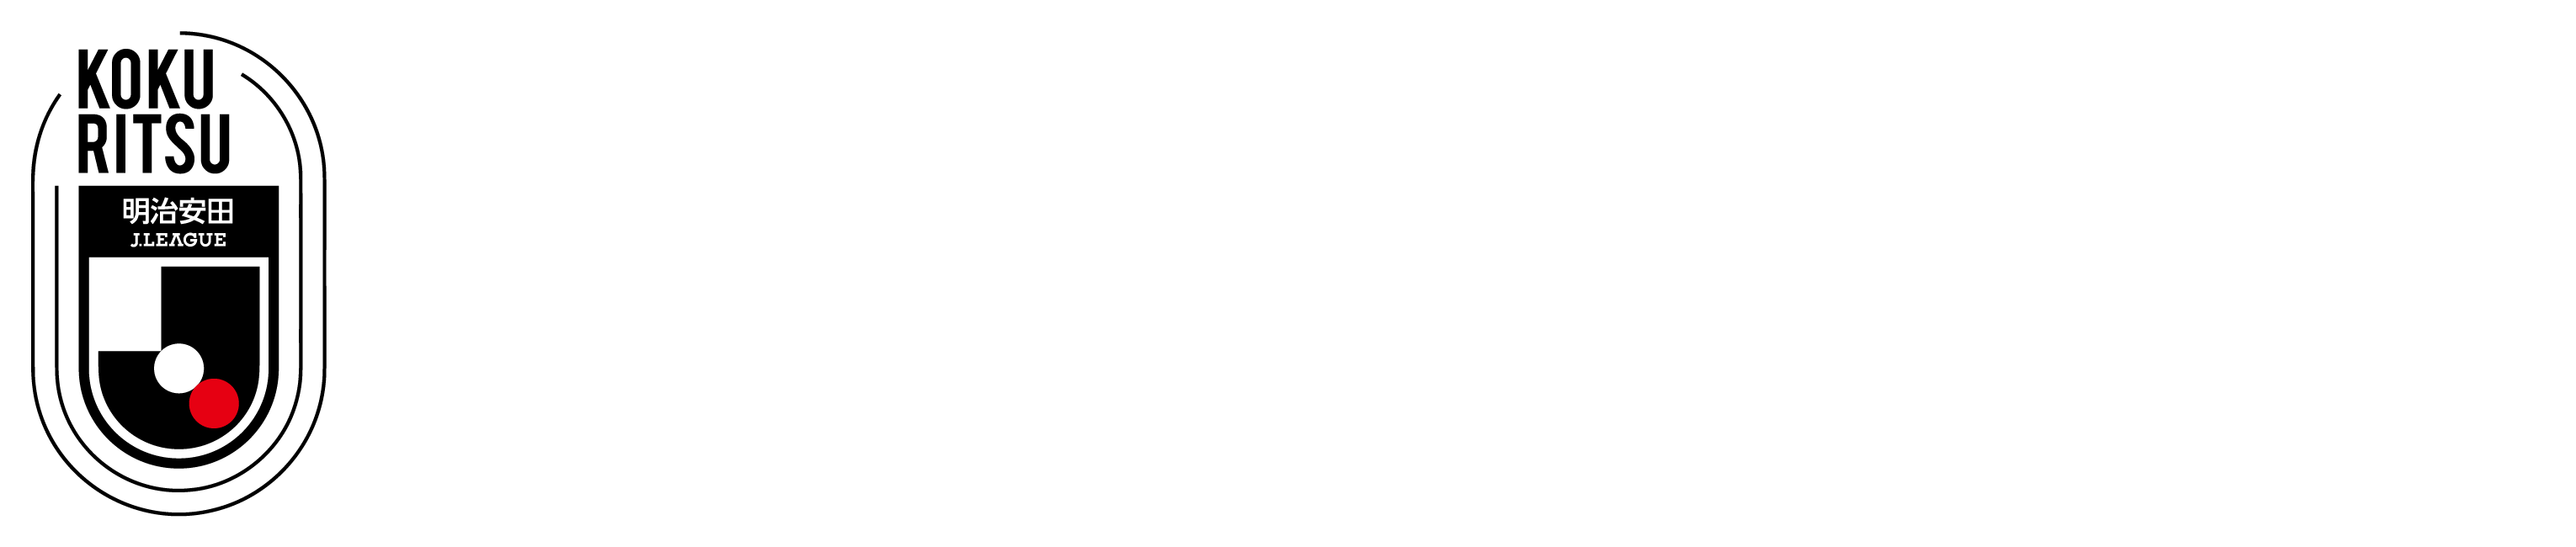 J.League Kokuritsu Logo B wide